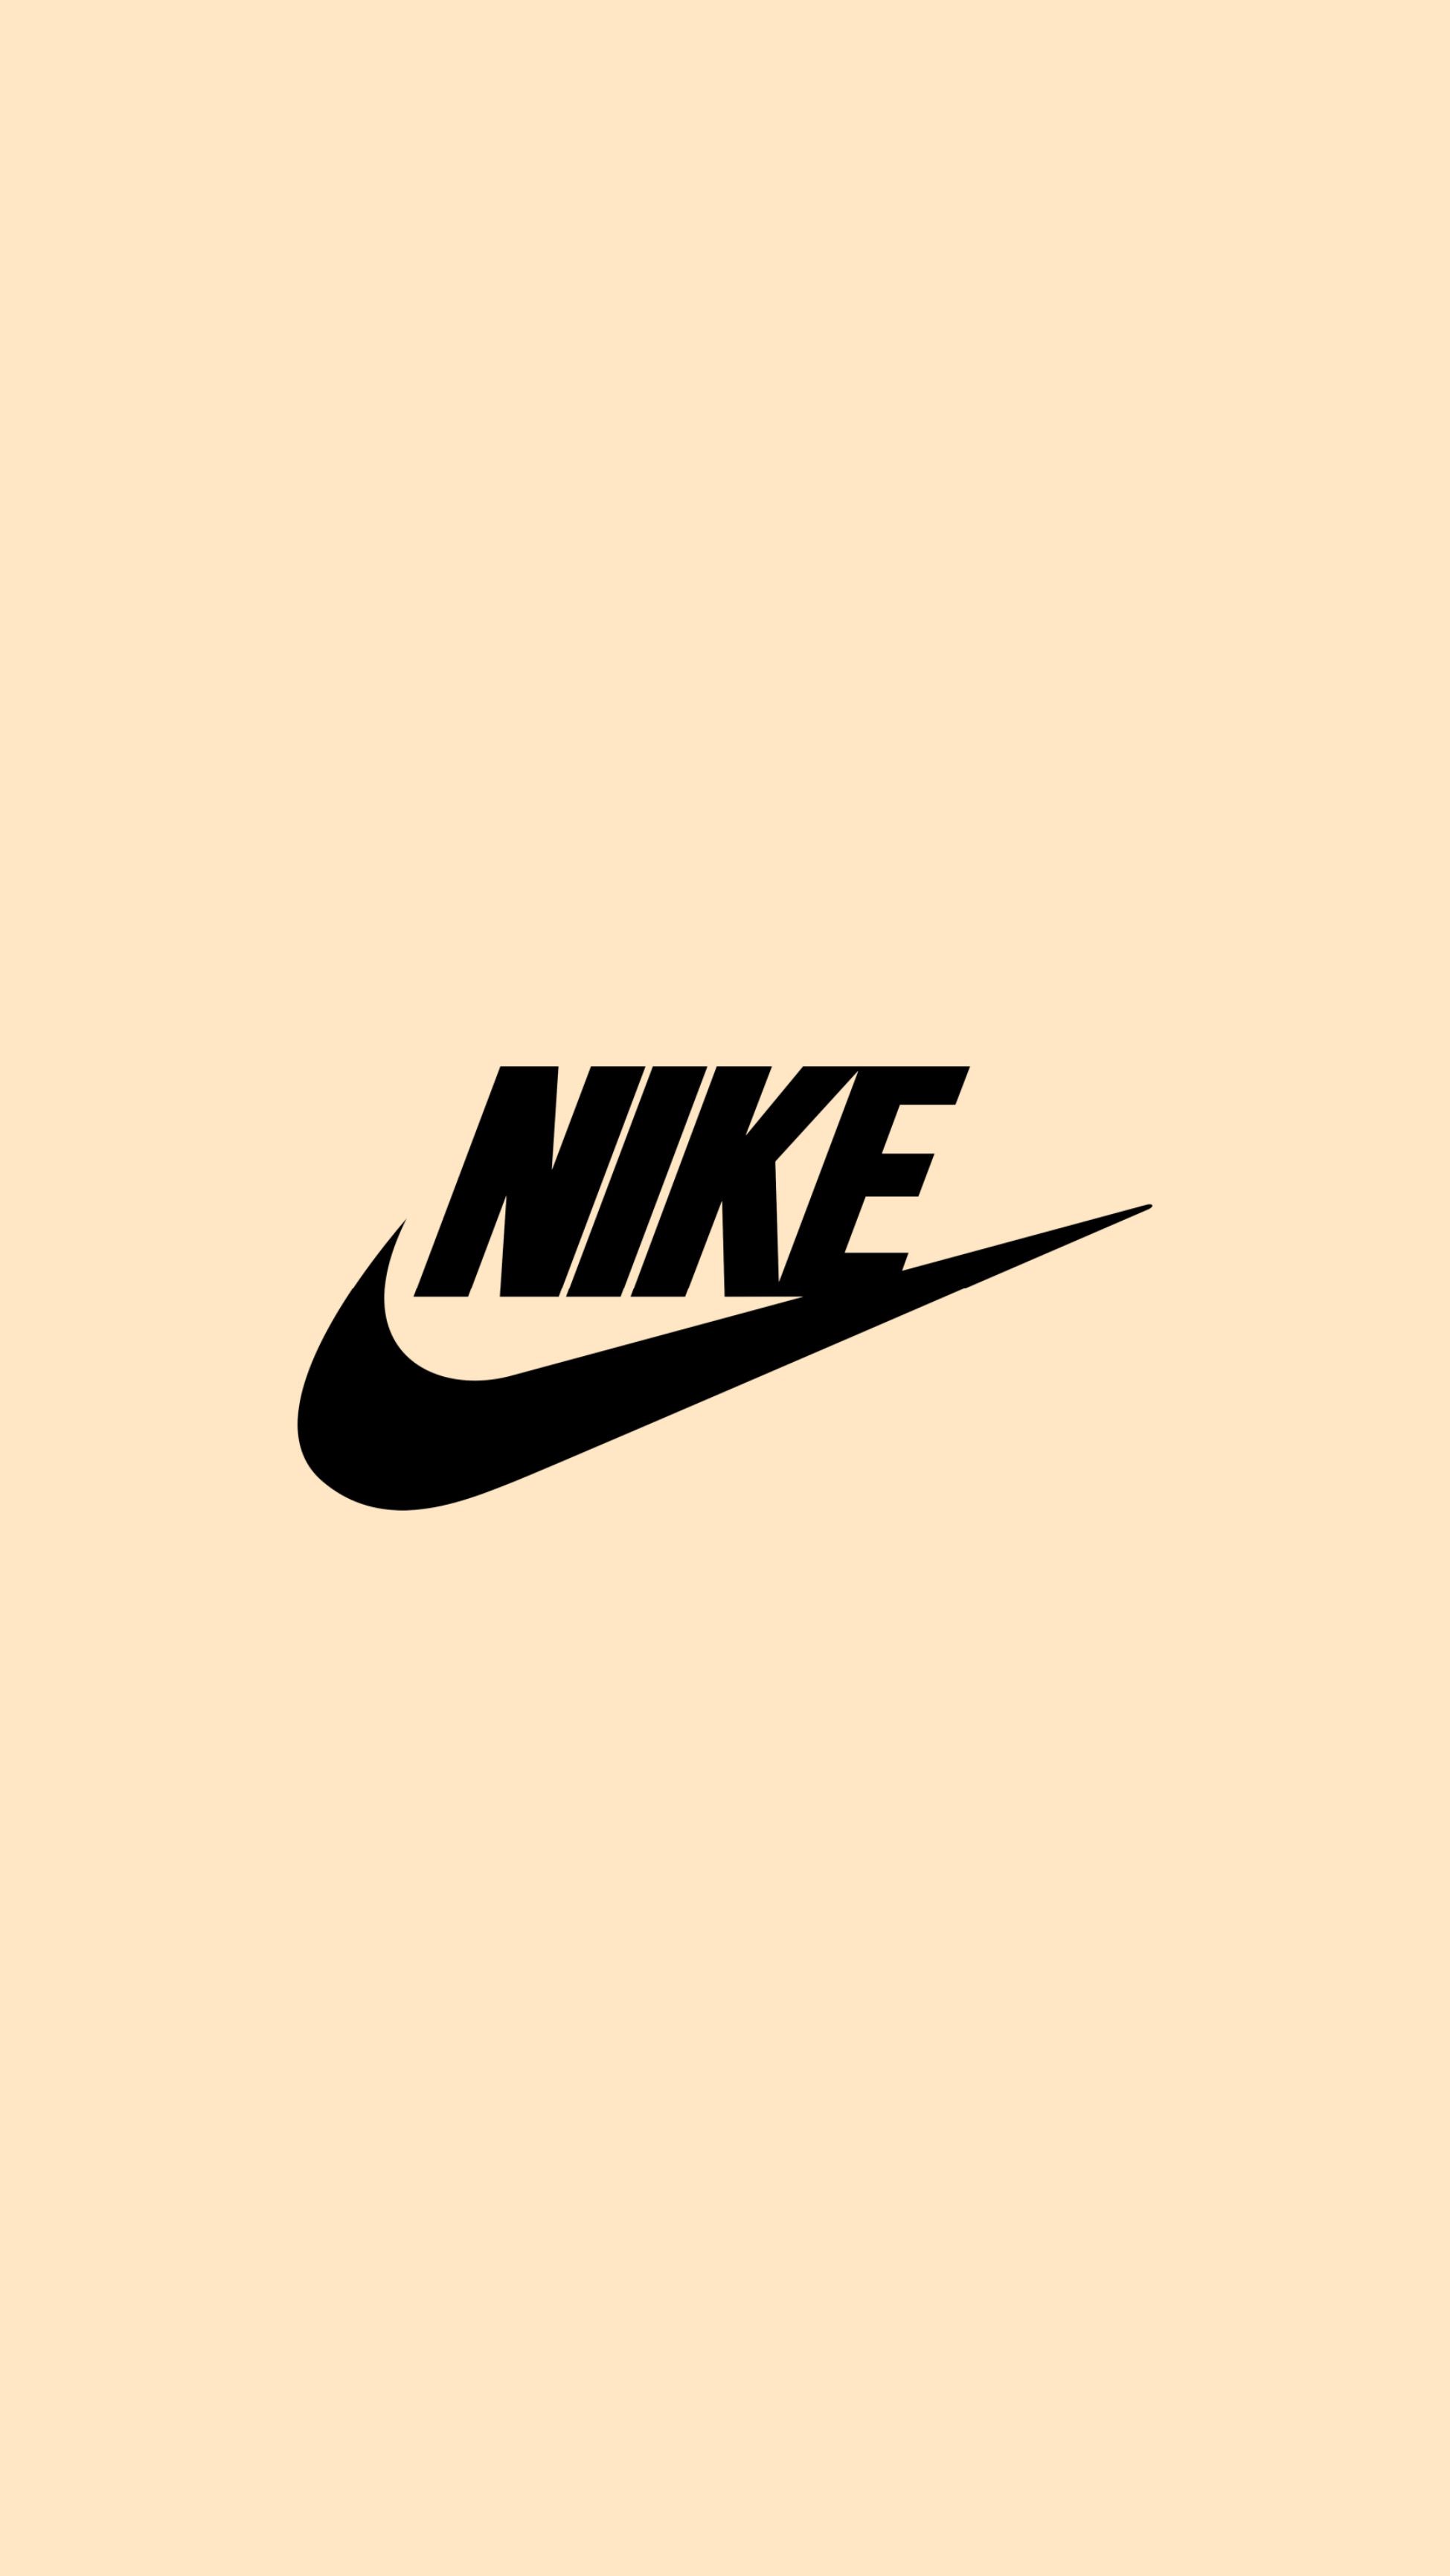 A black and white nike logo on an orange background - Nike